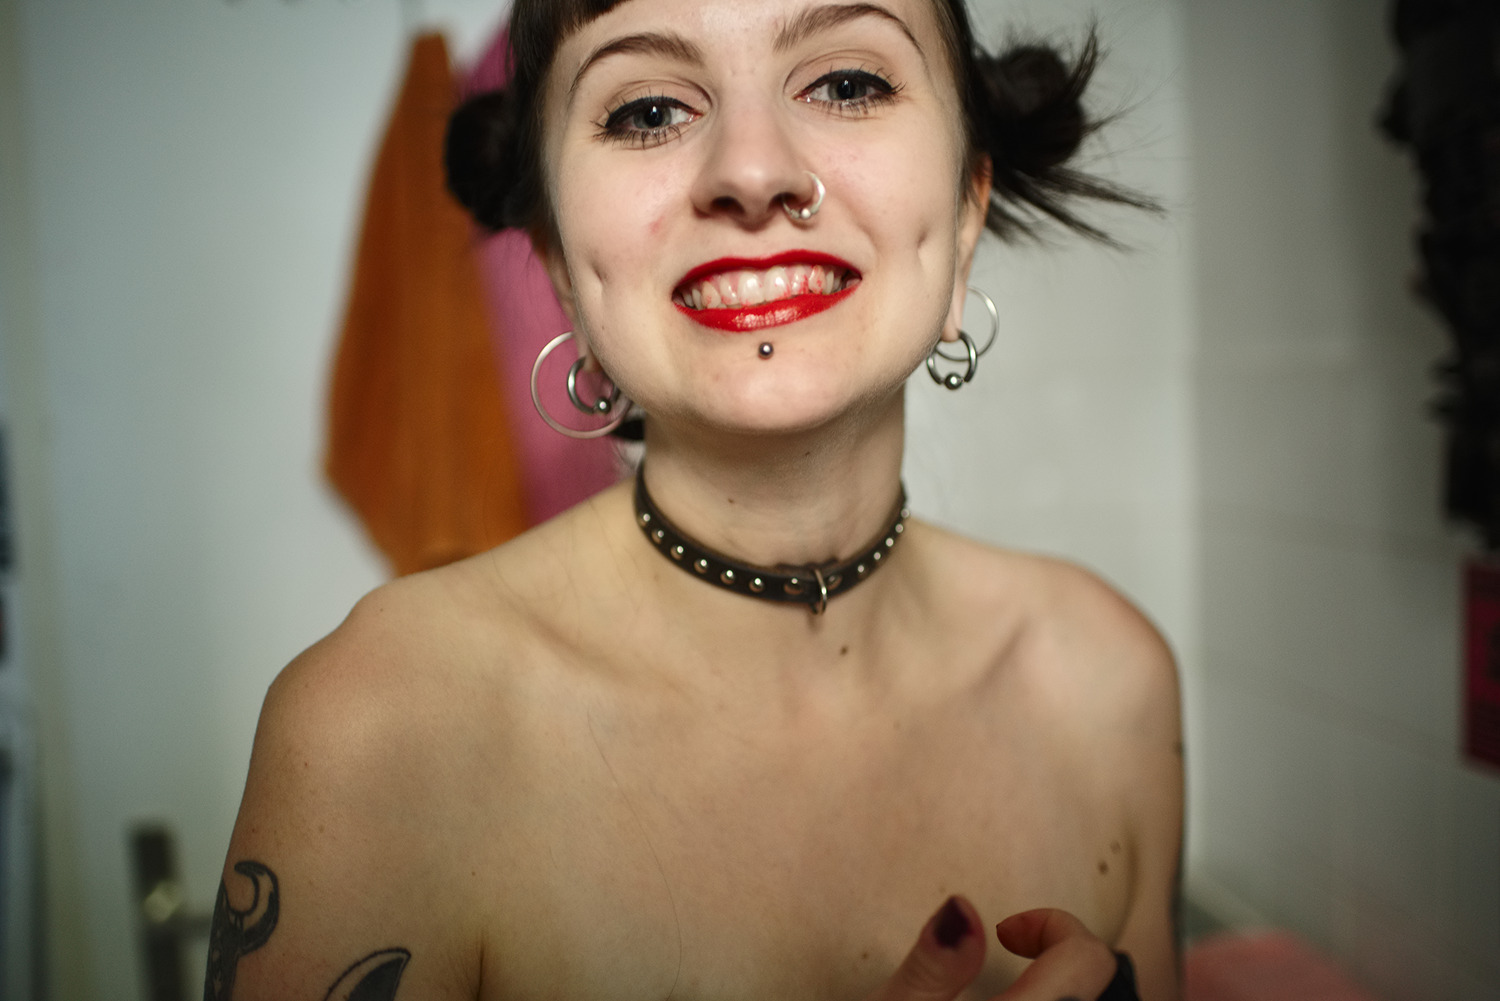 Iina wearing lipstick on her teeth, Berlin, 2016